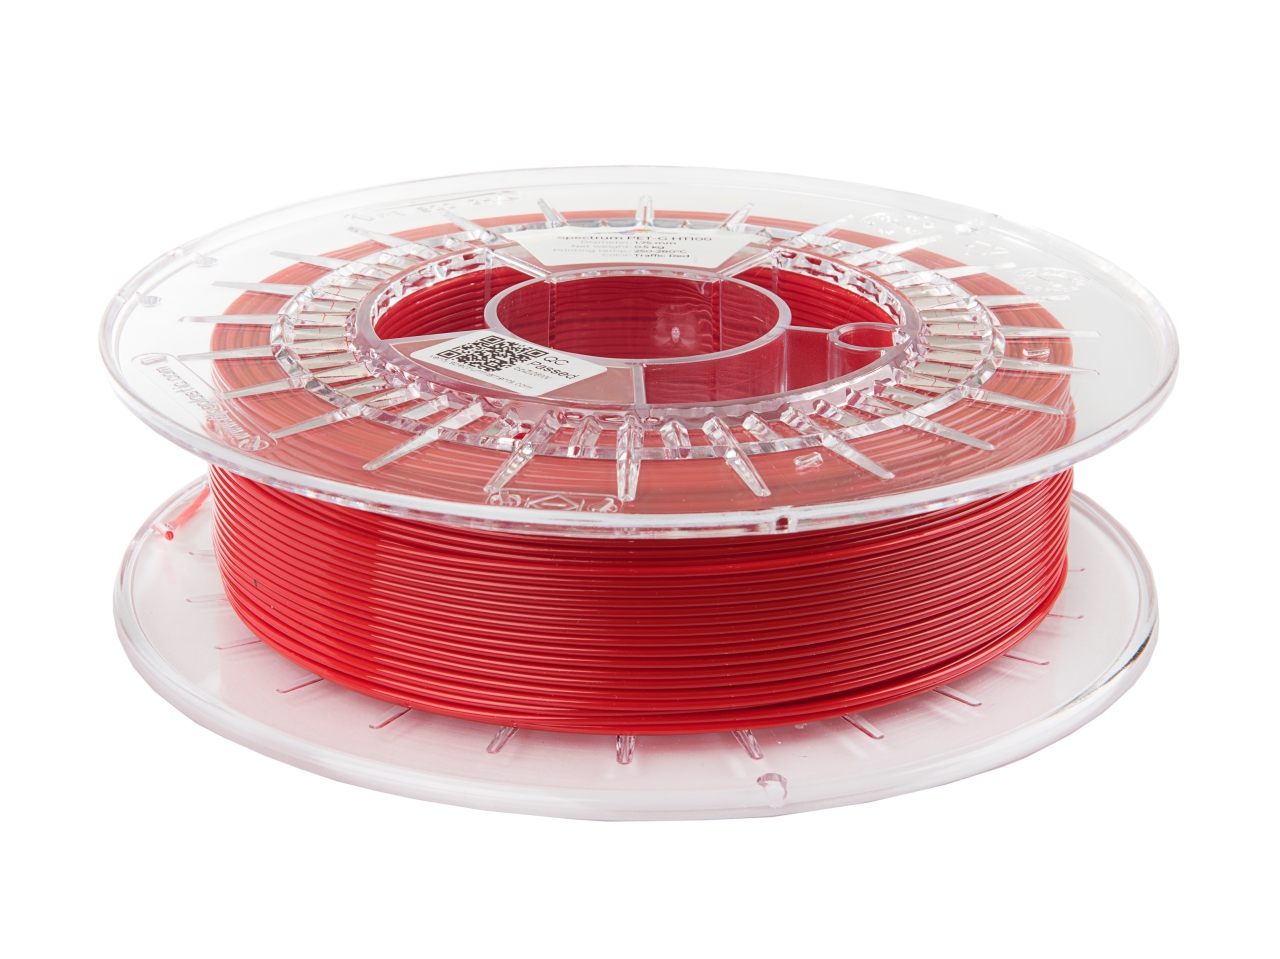 PETG HT100 filament Traffic Red 1,75 mm Spectrum 0,5 kg